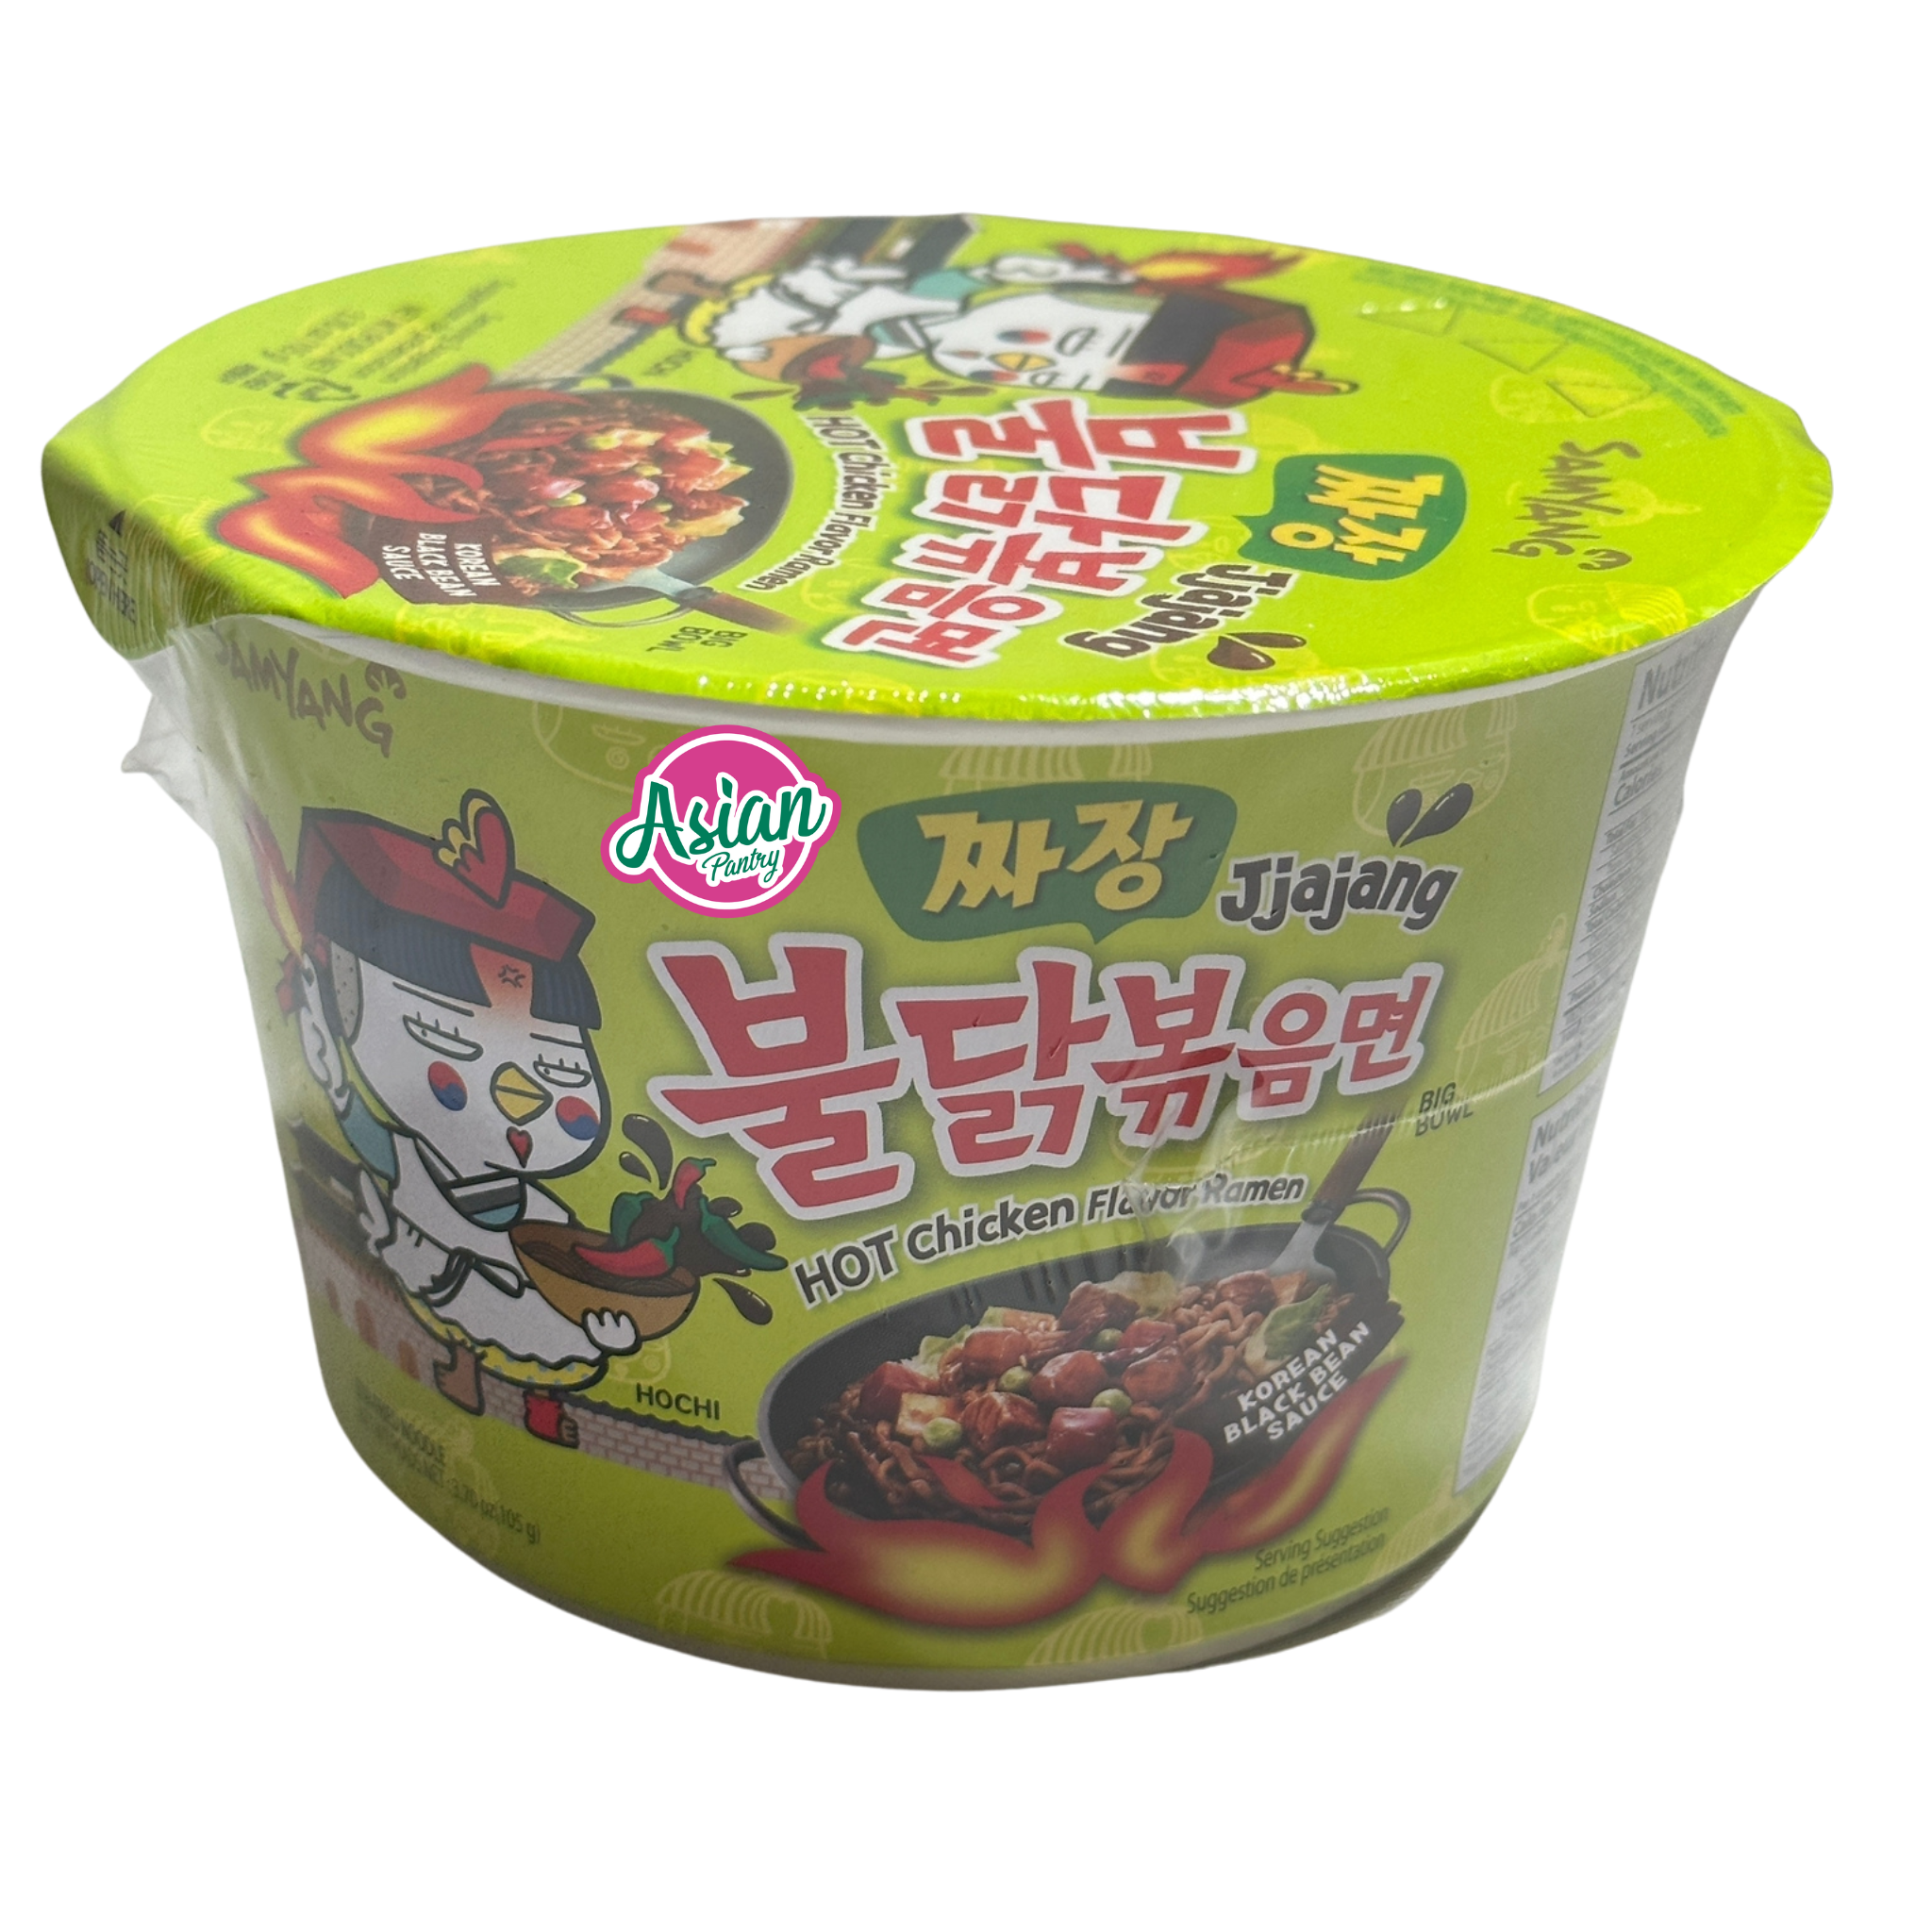 SAMYANG JJAJang Hot Chicken Ramen Noodle (Green)